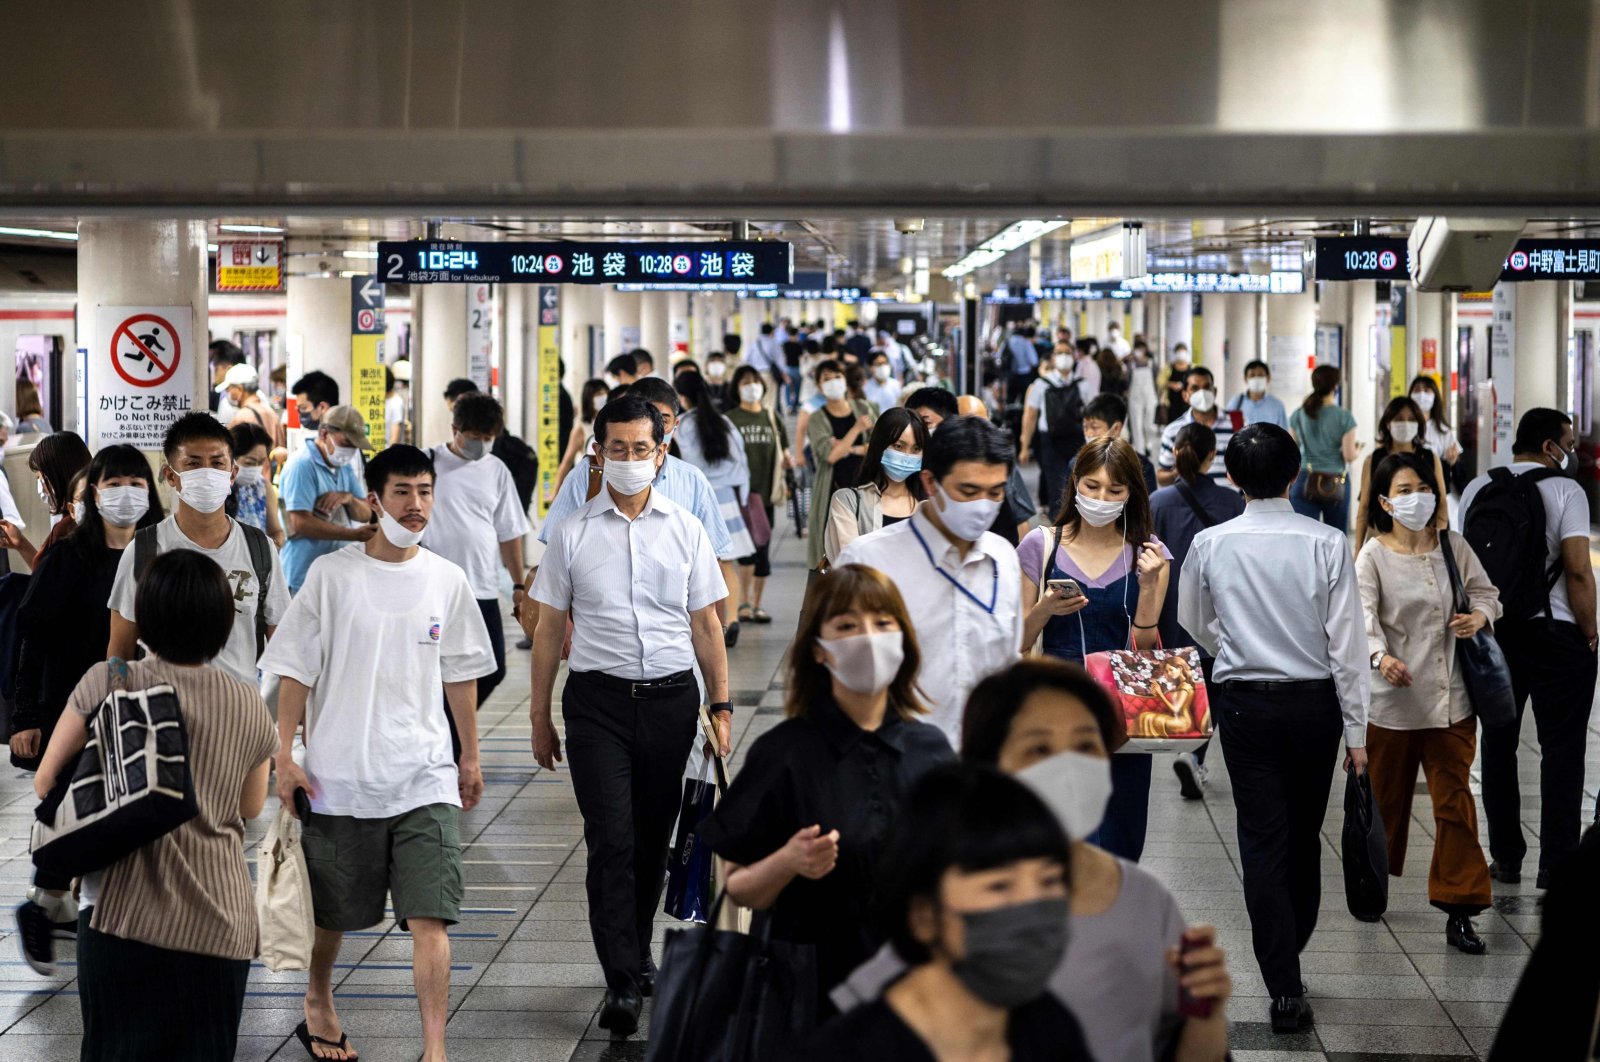 People walk in Tokyo's Shinjuku train station on July 20, 2021. (AFP Photo)